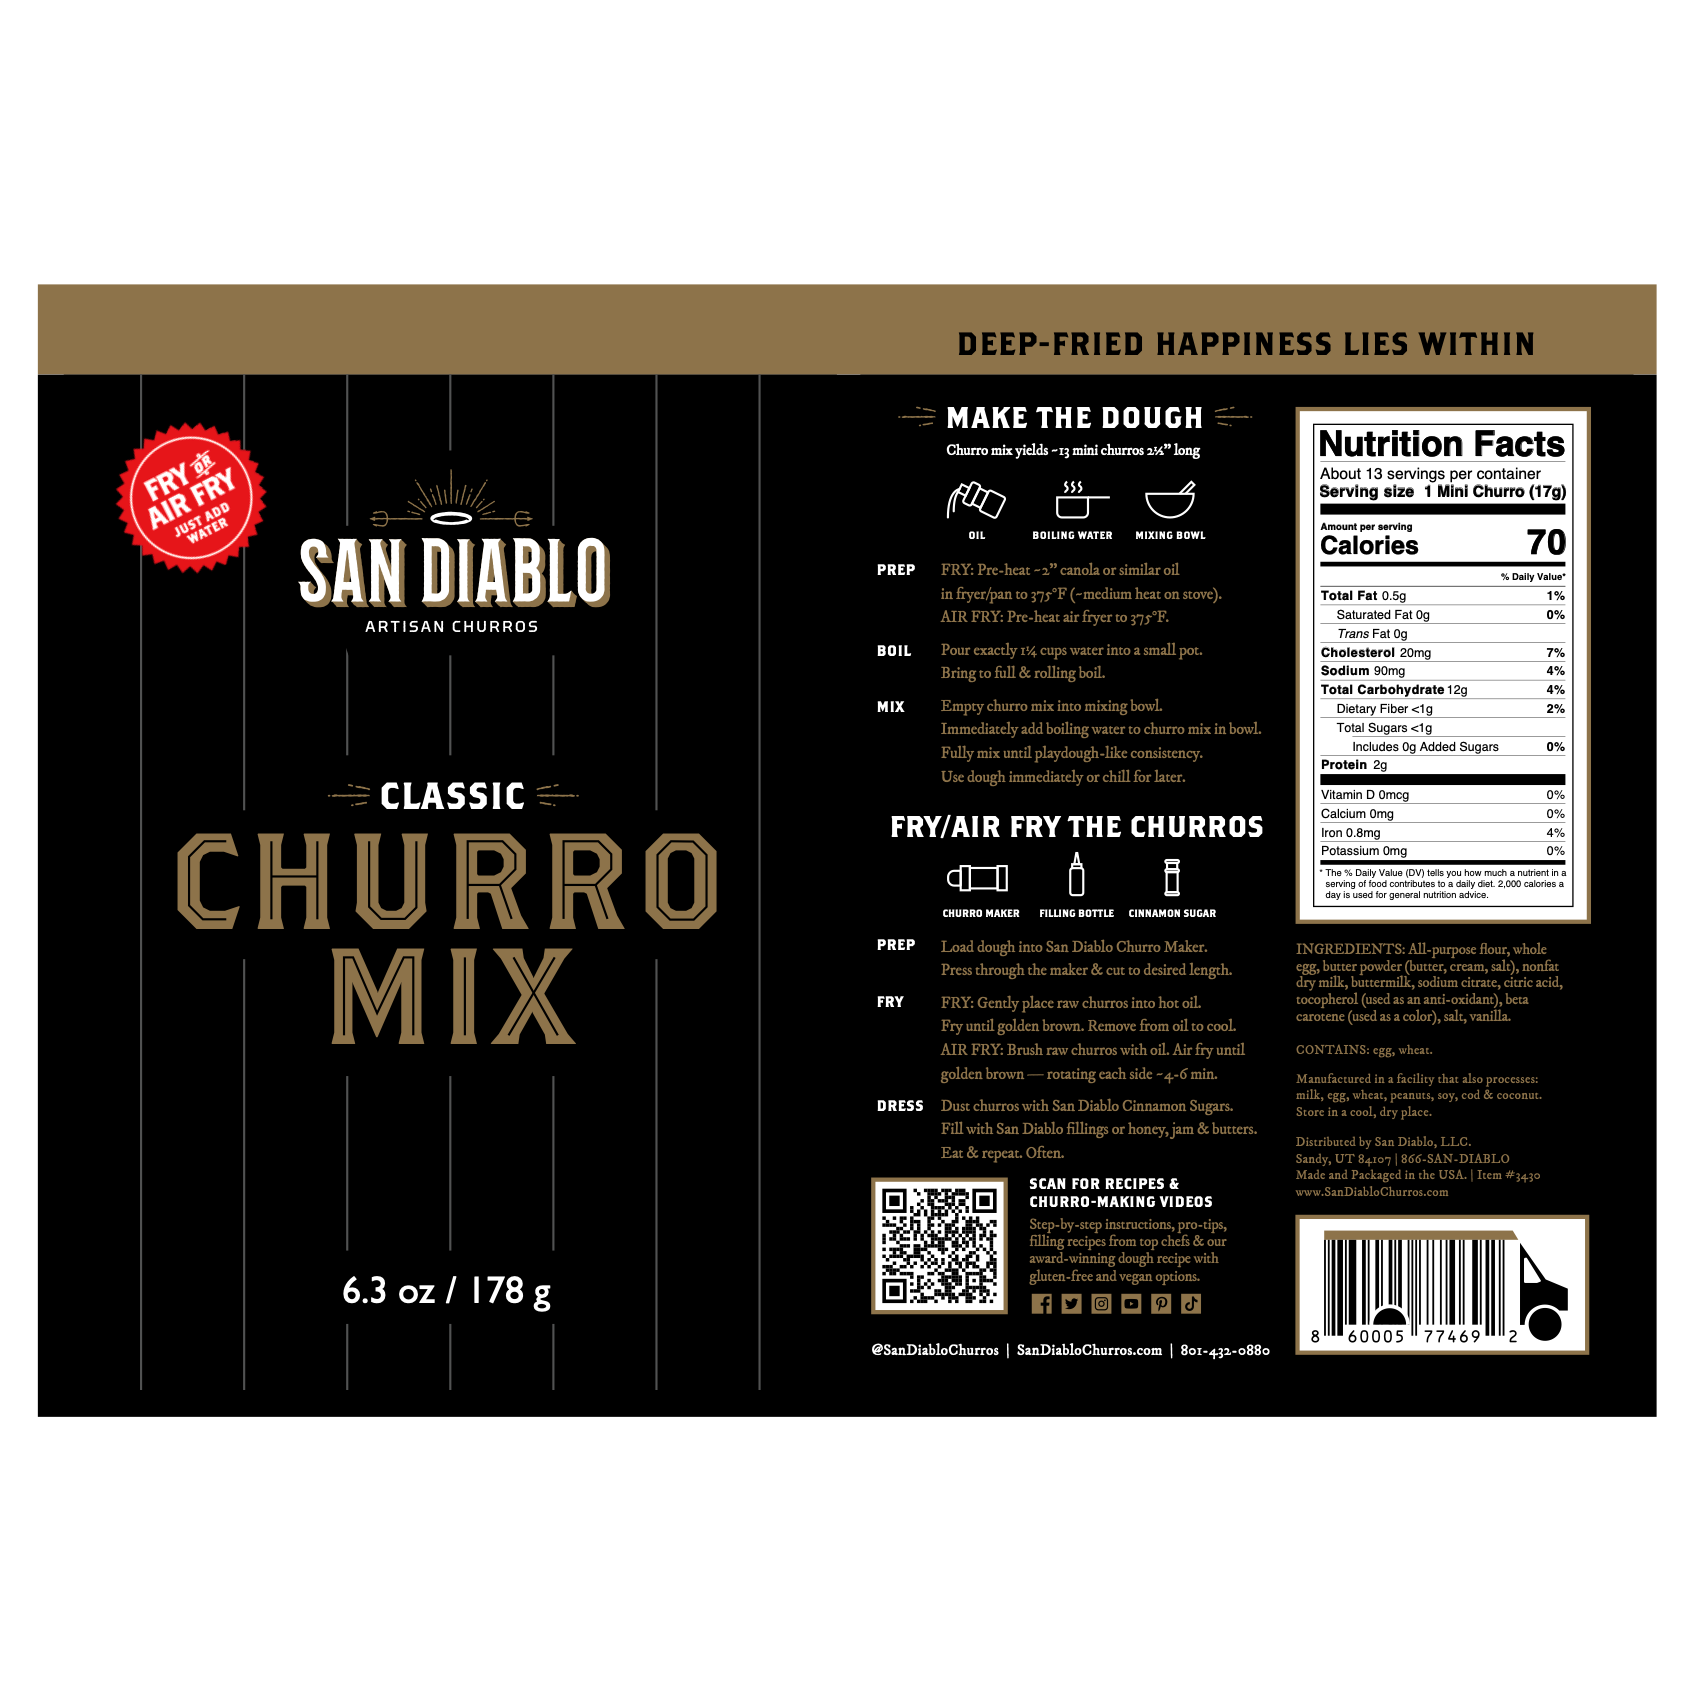 Churro Fiesta in a Box: The Ultimate Churro-Making Kit